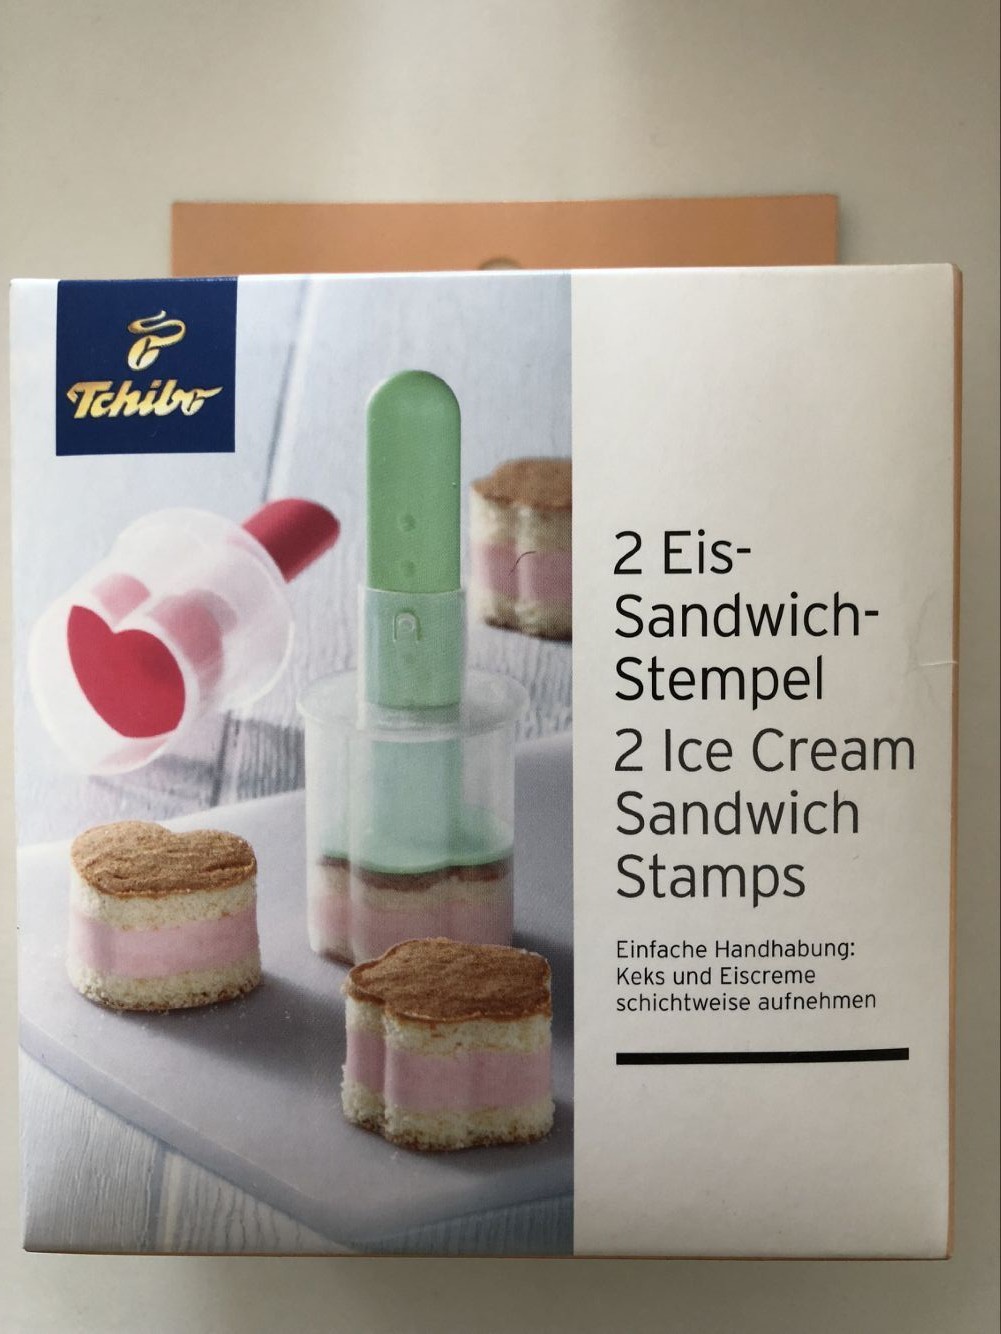 2 Ice Cream Sandwich Stamps